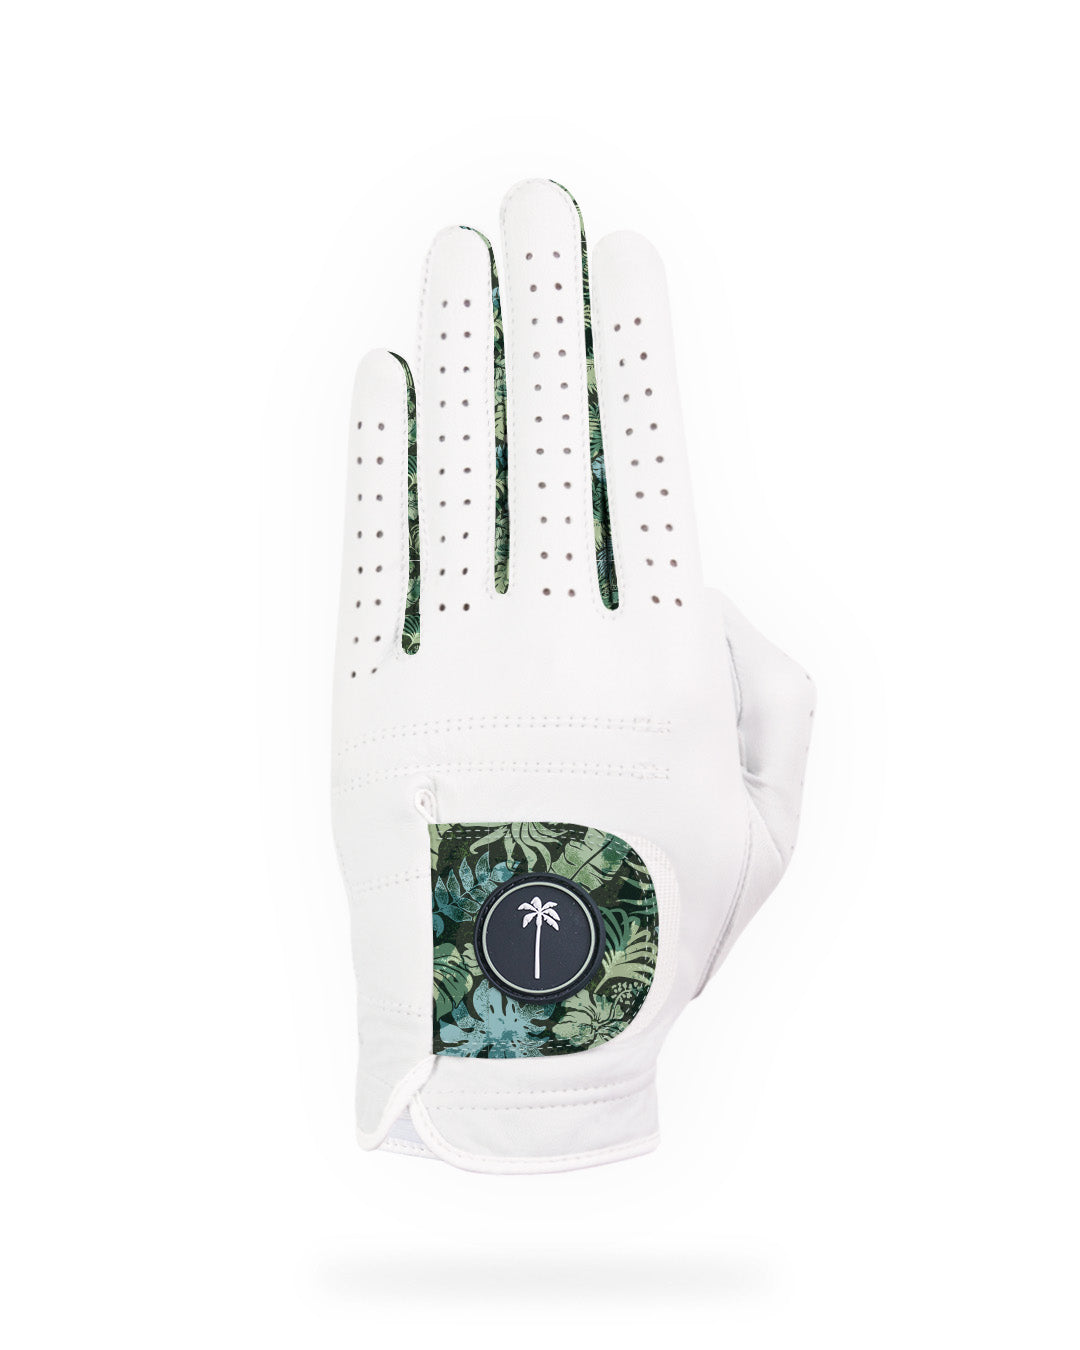 Men's Traverse Glove - Palm Golf Co.